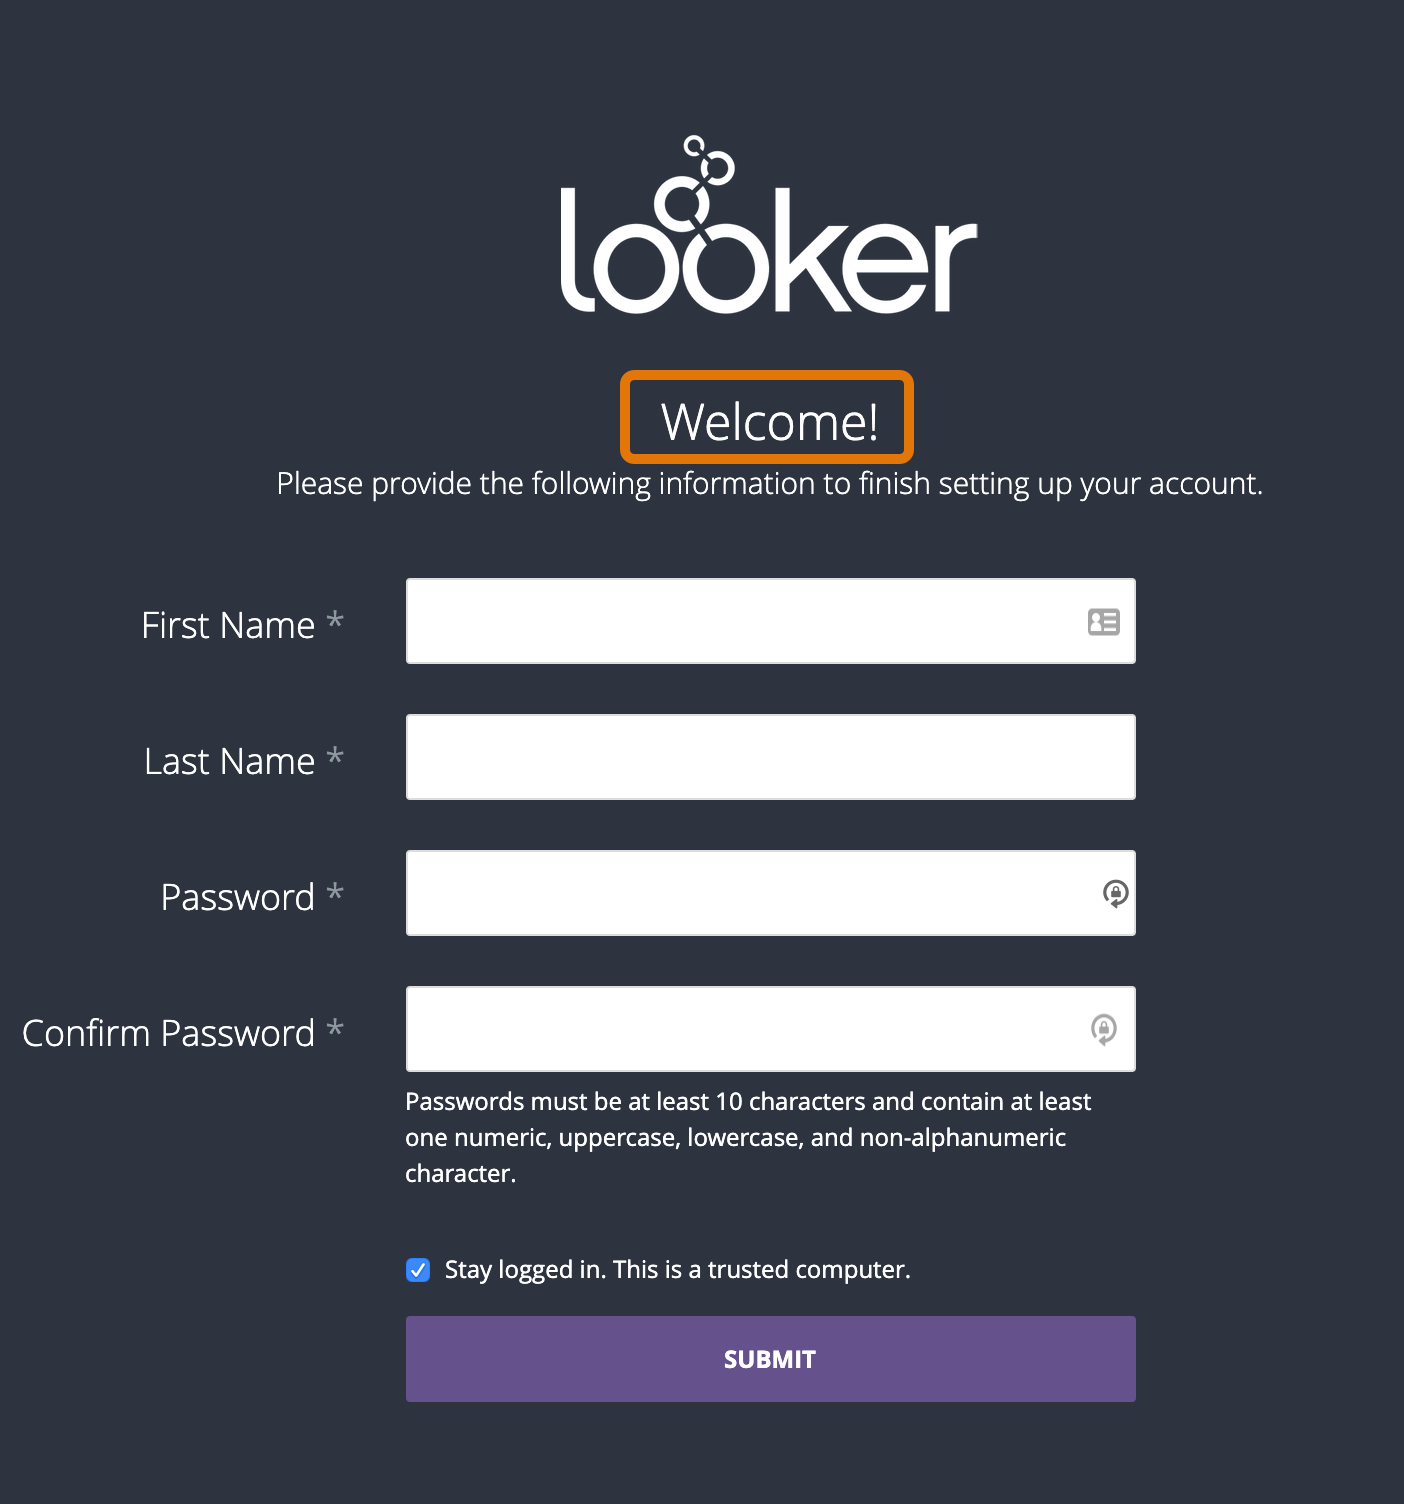 Looker 账号设置页面的屏幕截图。页面顶部有一个 Looker 徽标，后面紧跟着“Welcome!”字样。